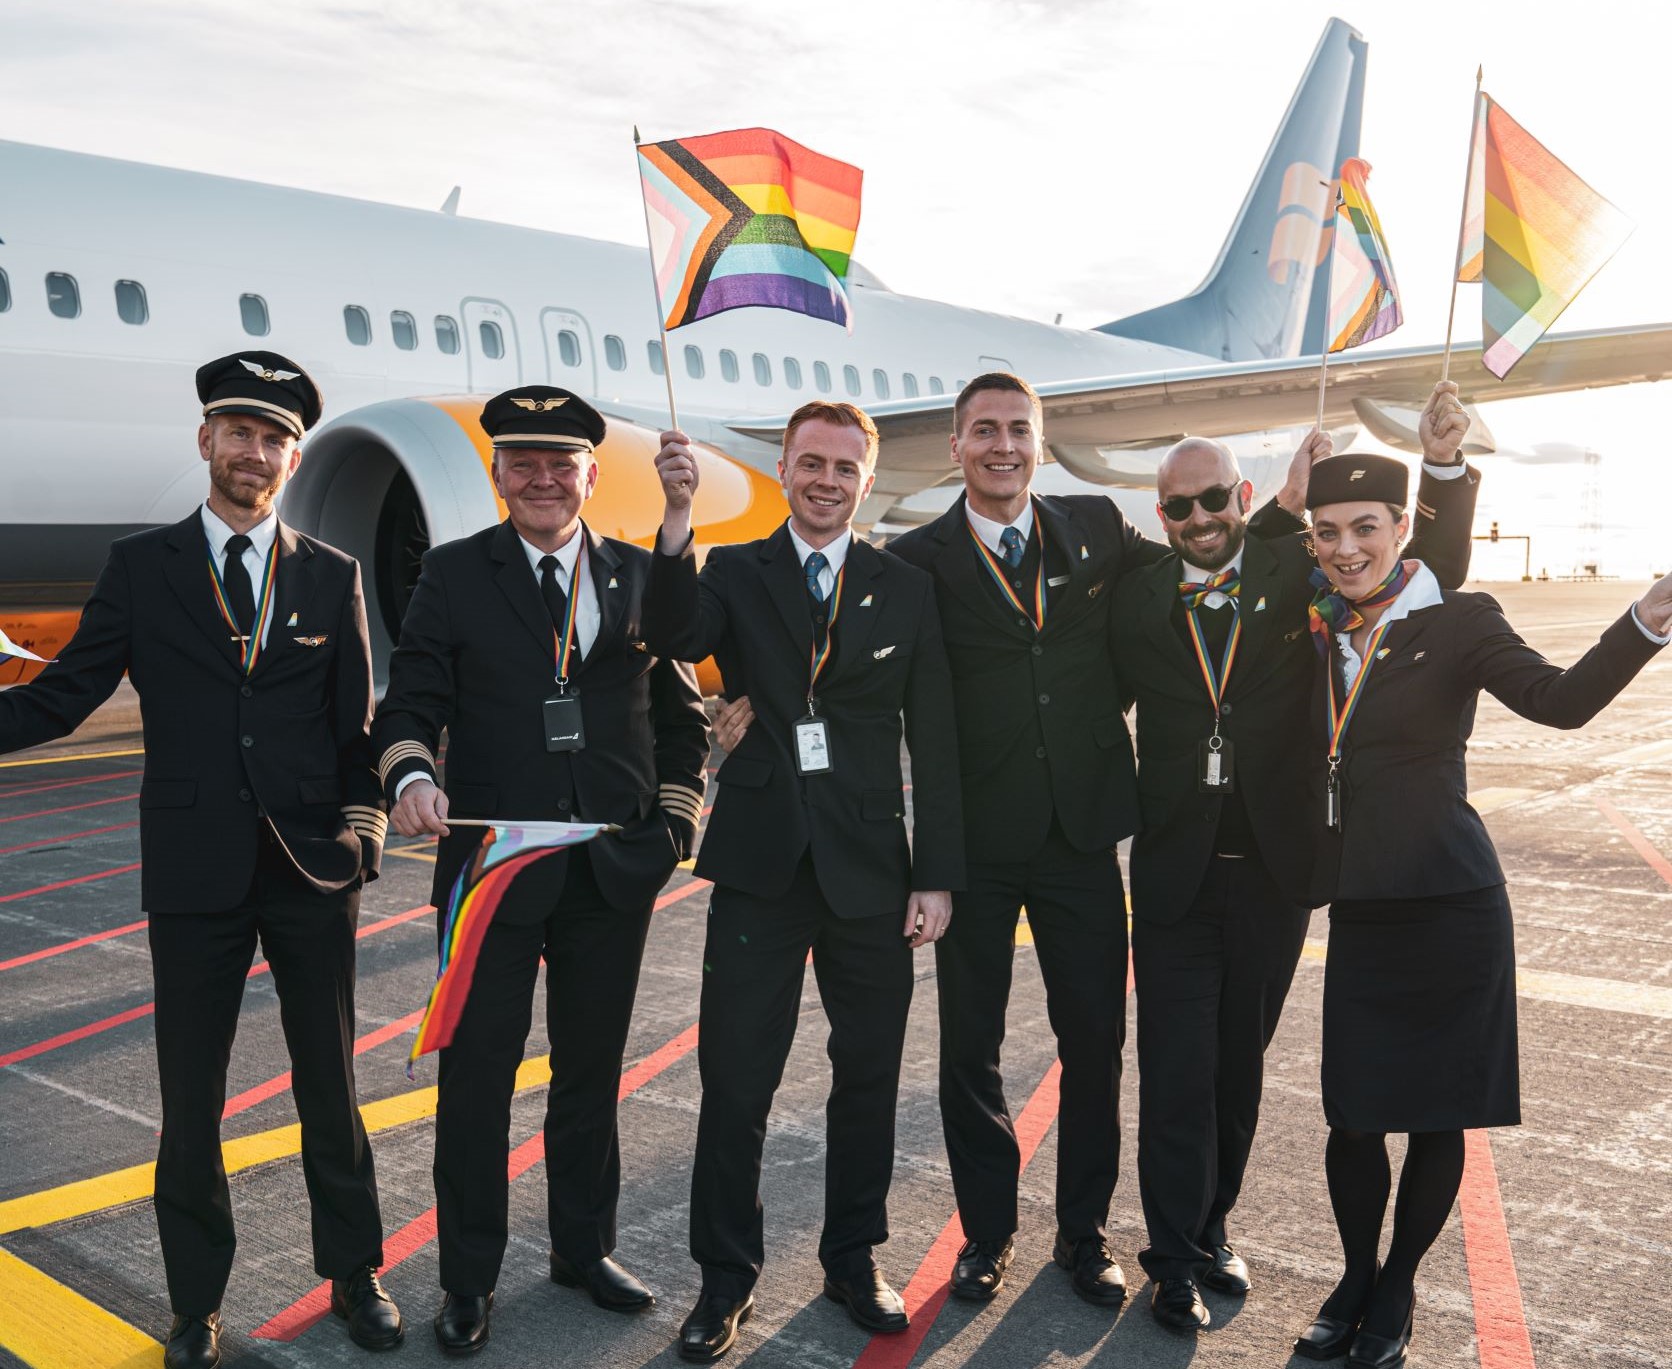 Icelandair's Pride flight 2022: 2 pilots and 4 cabin crew stand in front of Icelandair plane, waving rainbow flags.